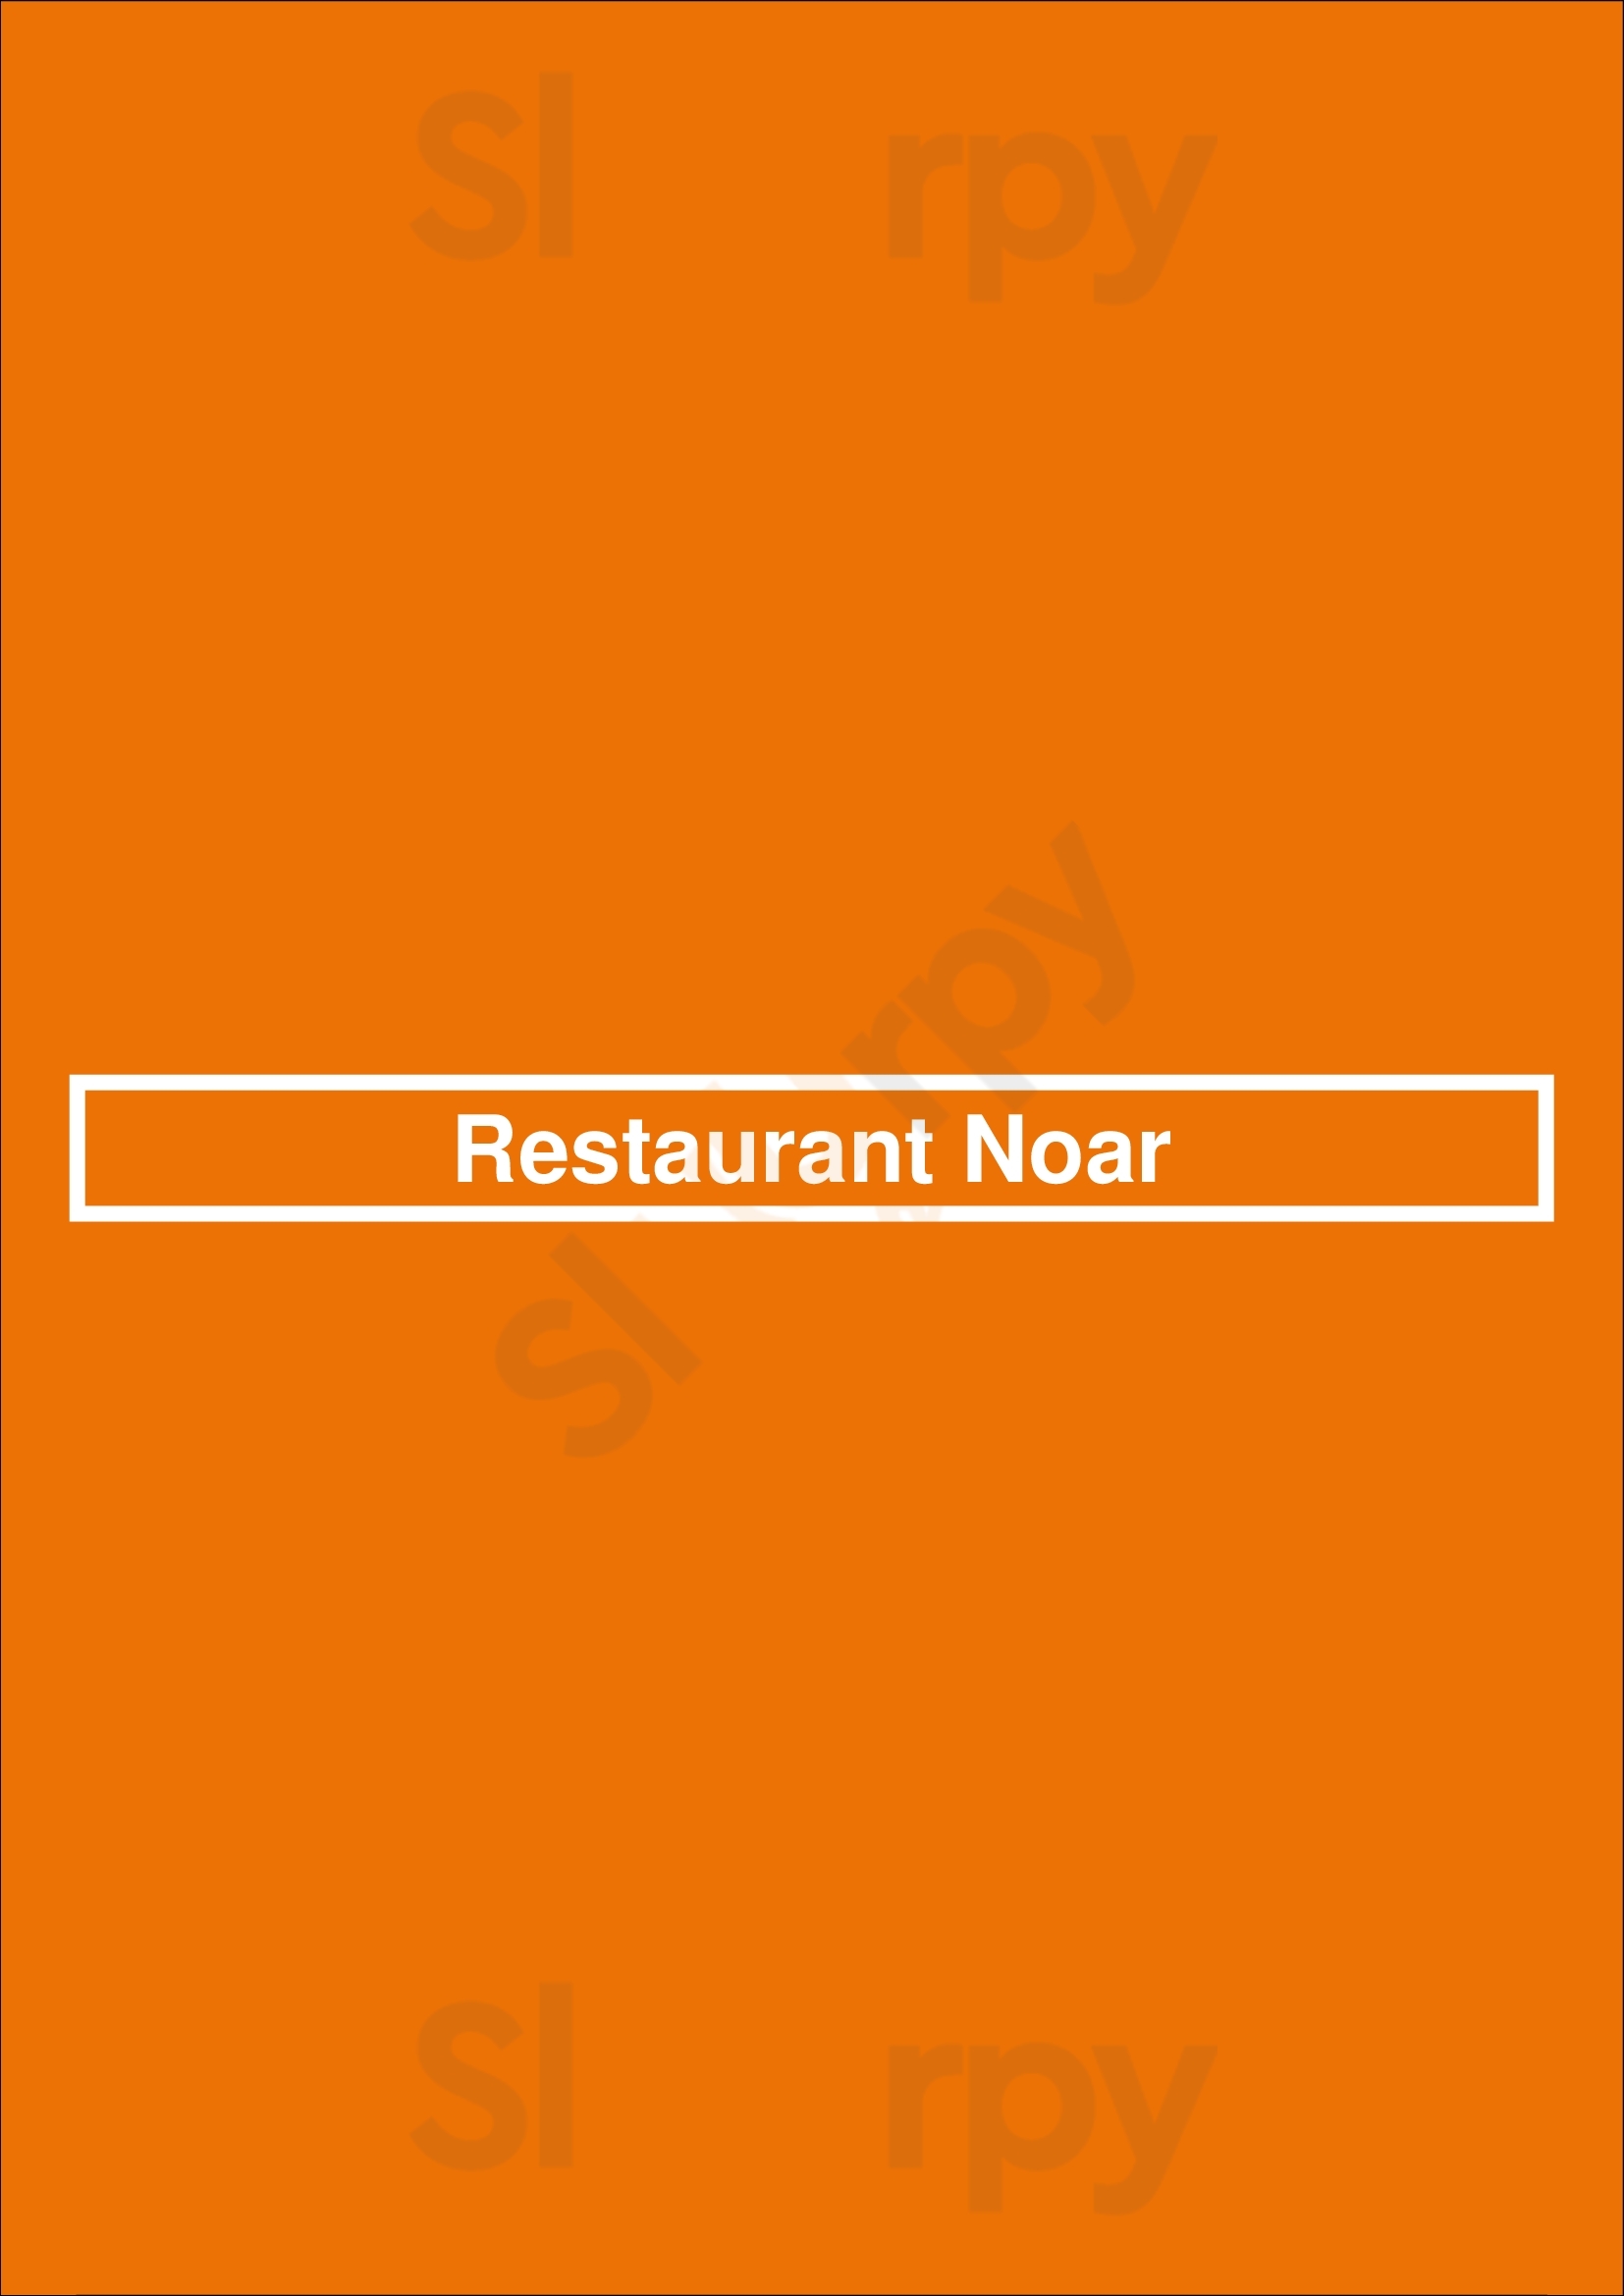 Restaurant Noar Amsterdam Menu - 1